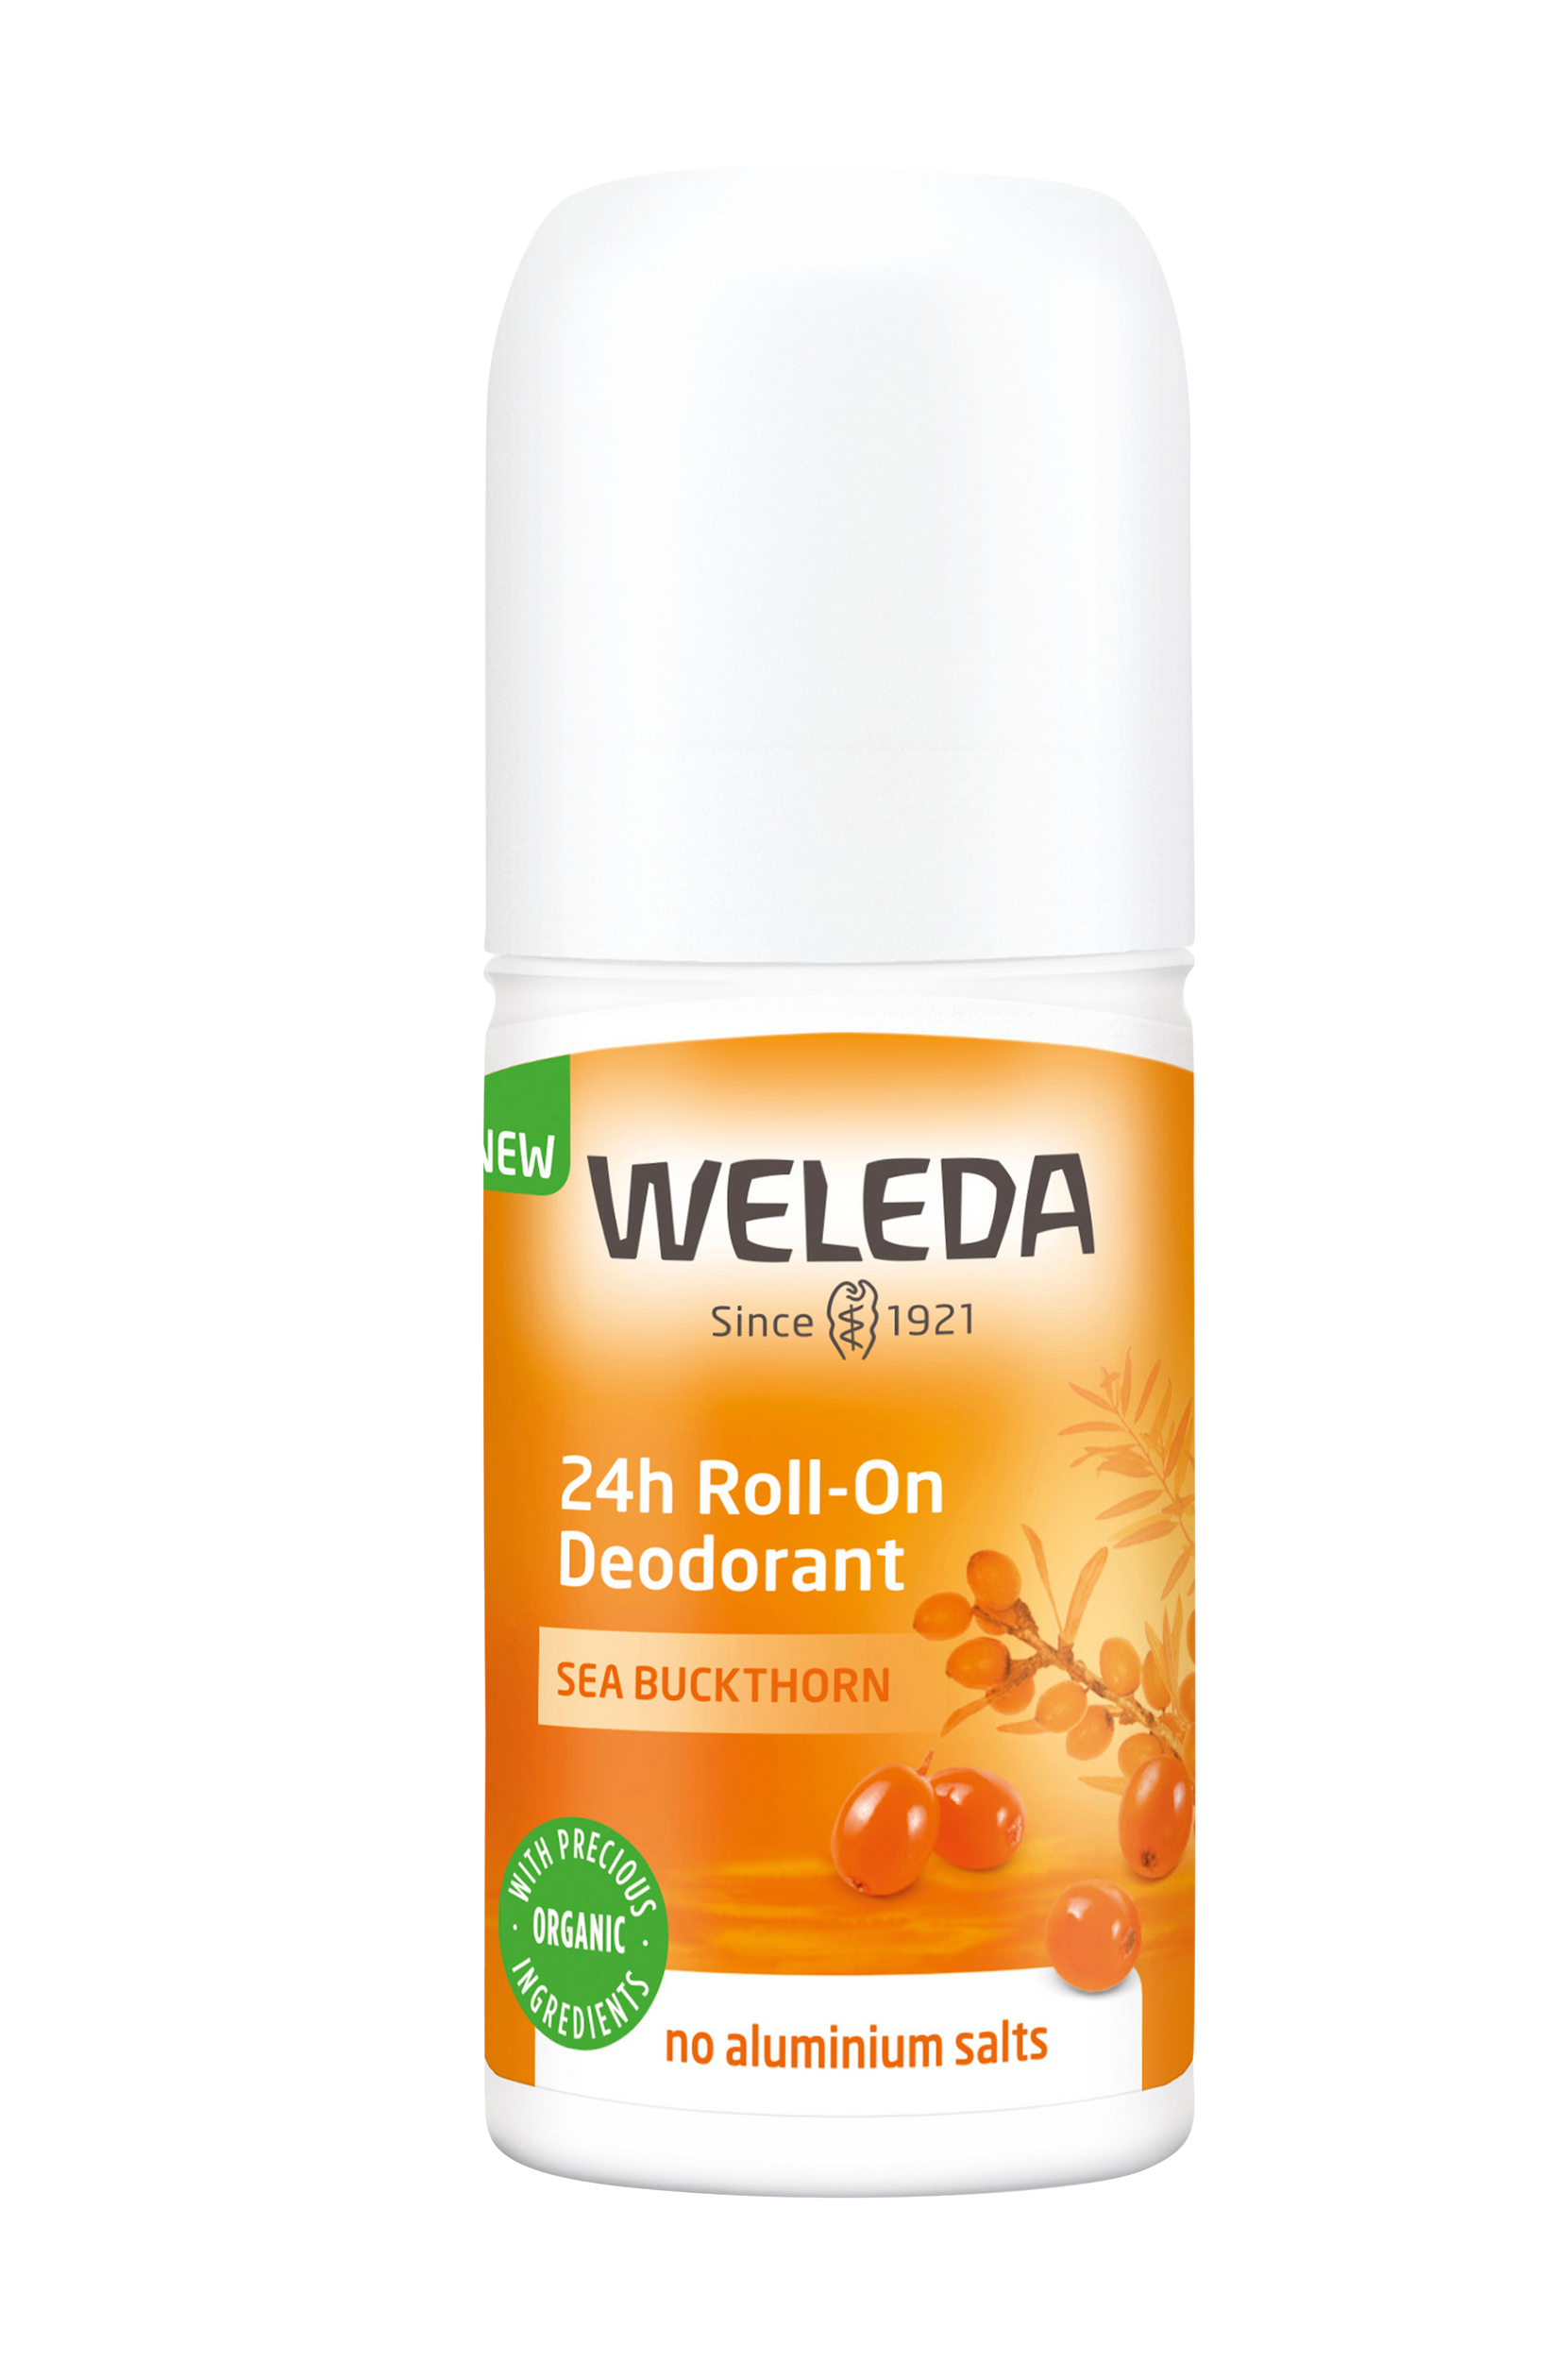 Sea Buckthorn 24h Roll-On Deodorant, Weleda